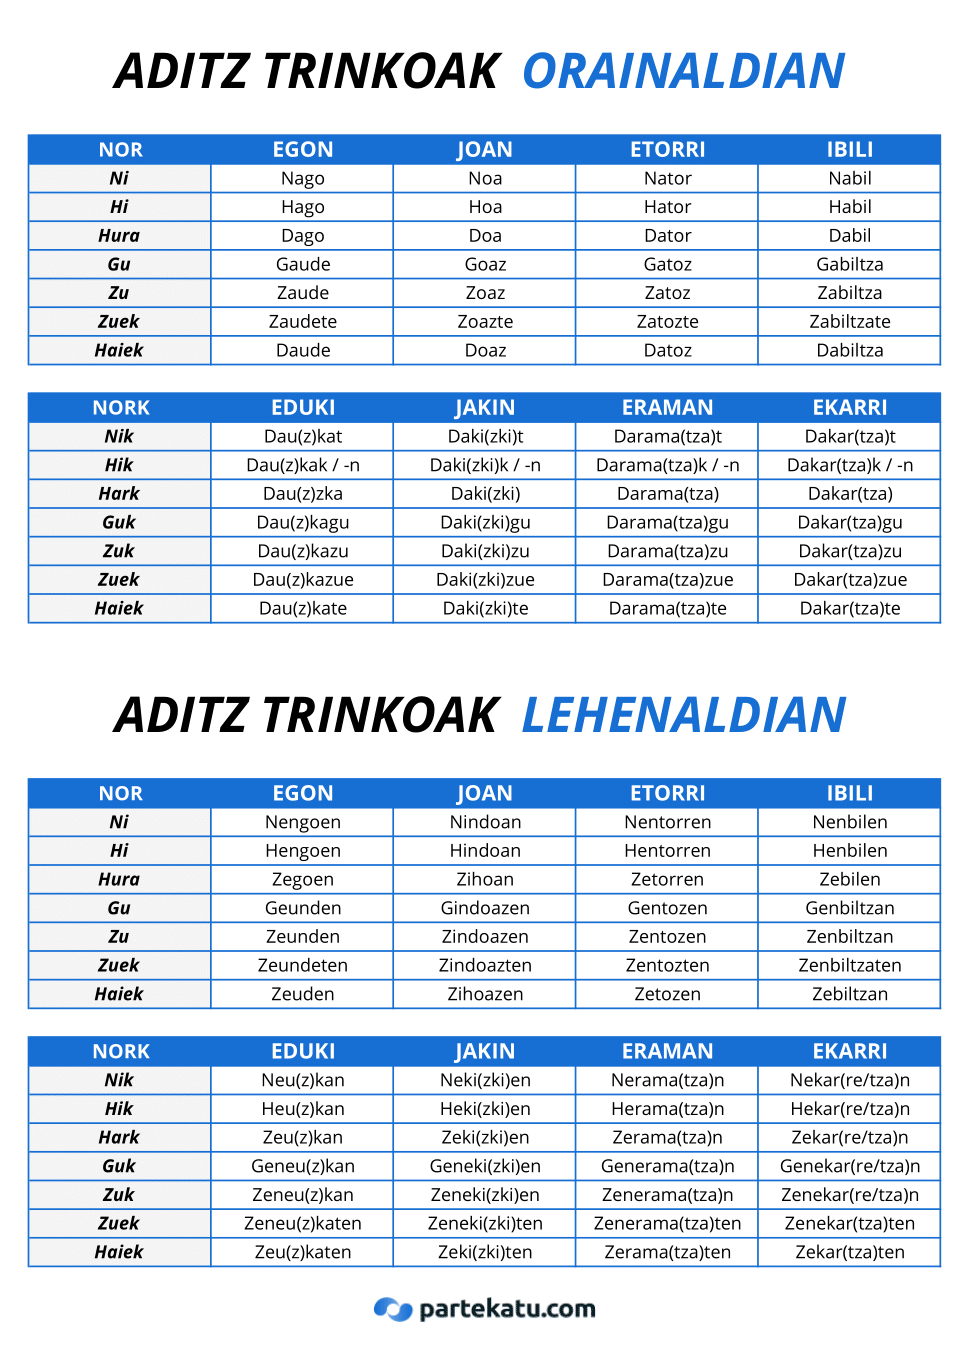 tabla de varios aditz trinkoak del euskera